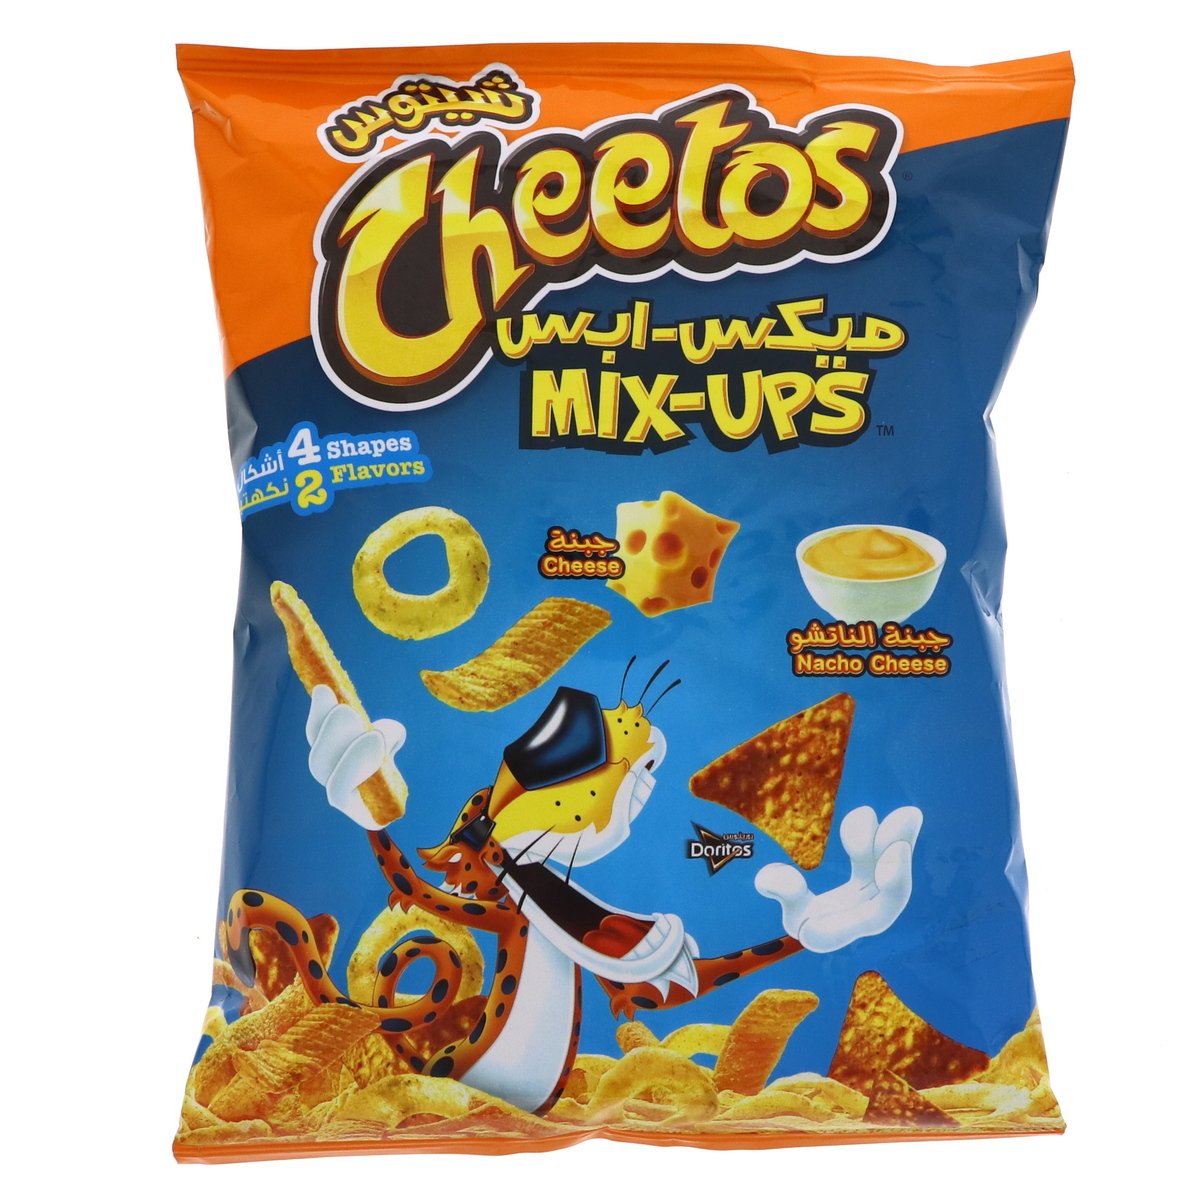 Cheetos Mix-Up Cheese & Nacho Cheese 55 g